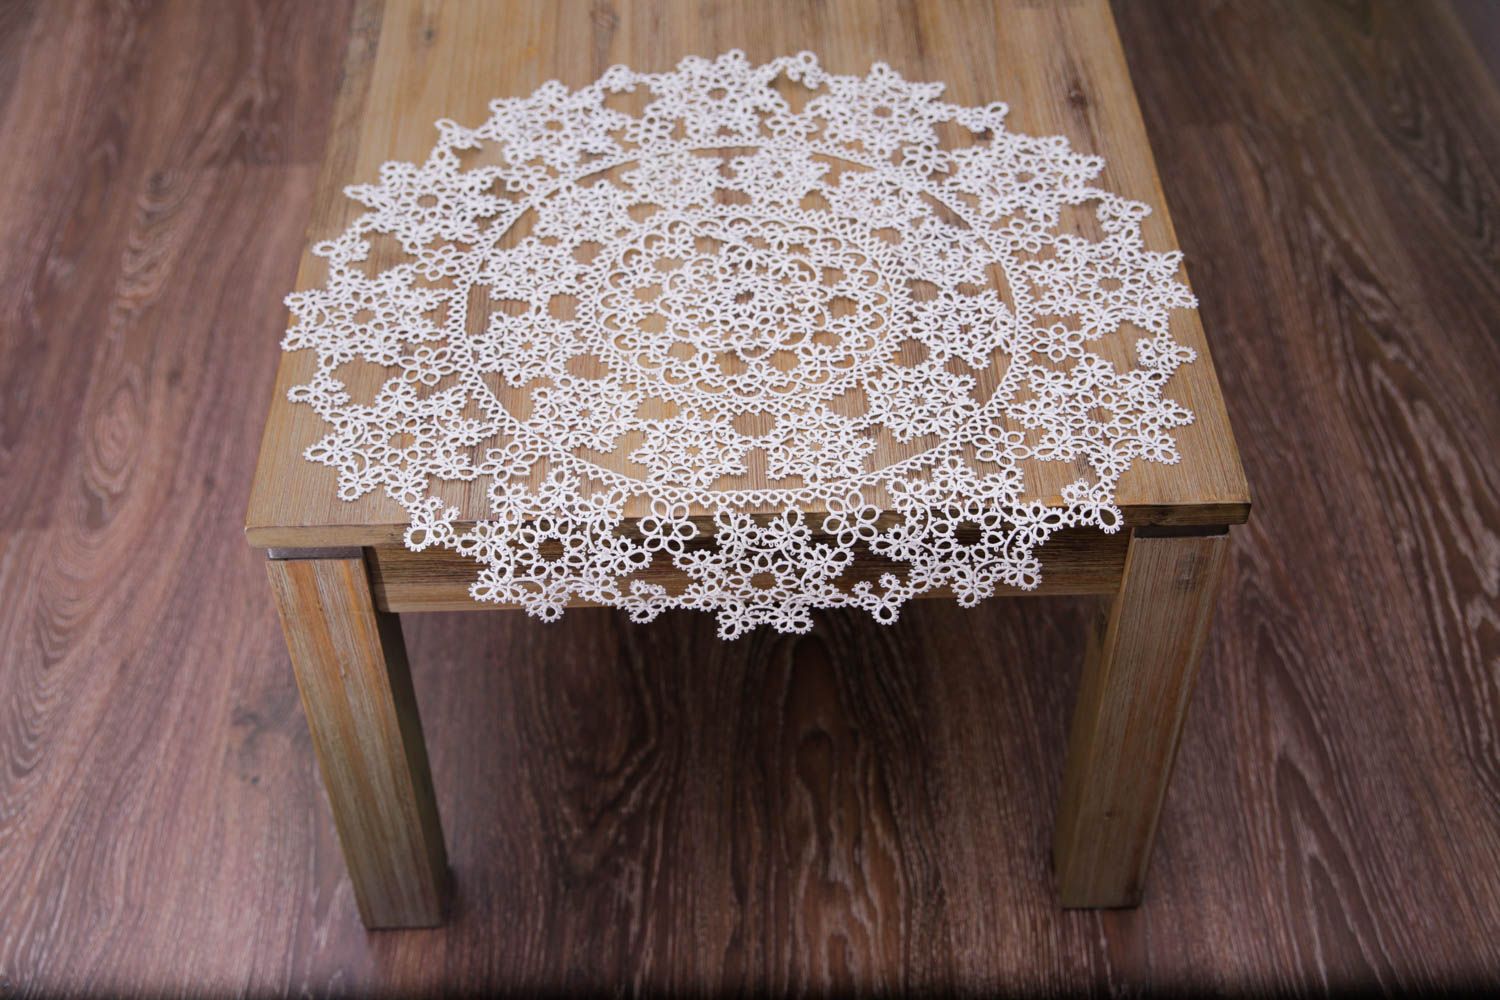 Handmade napkin unusual accessory table decor ideas home textiles table cloth photo 1